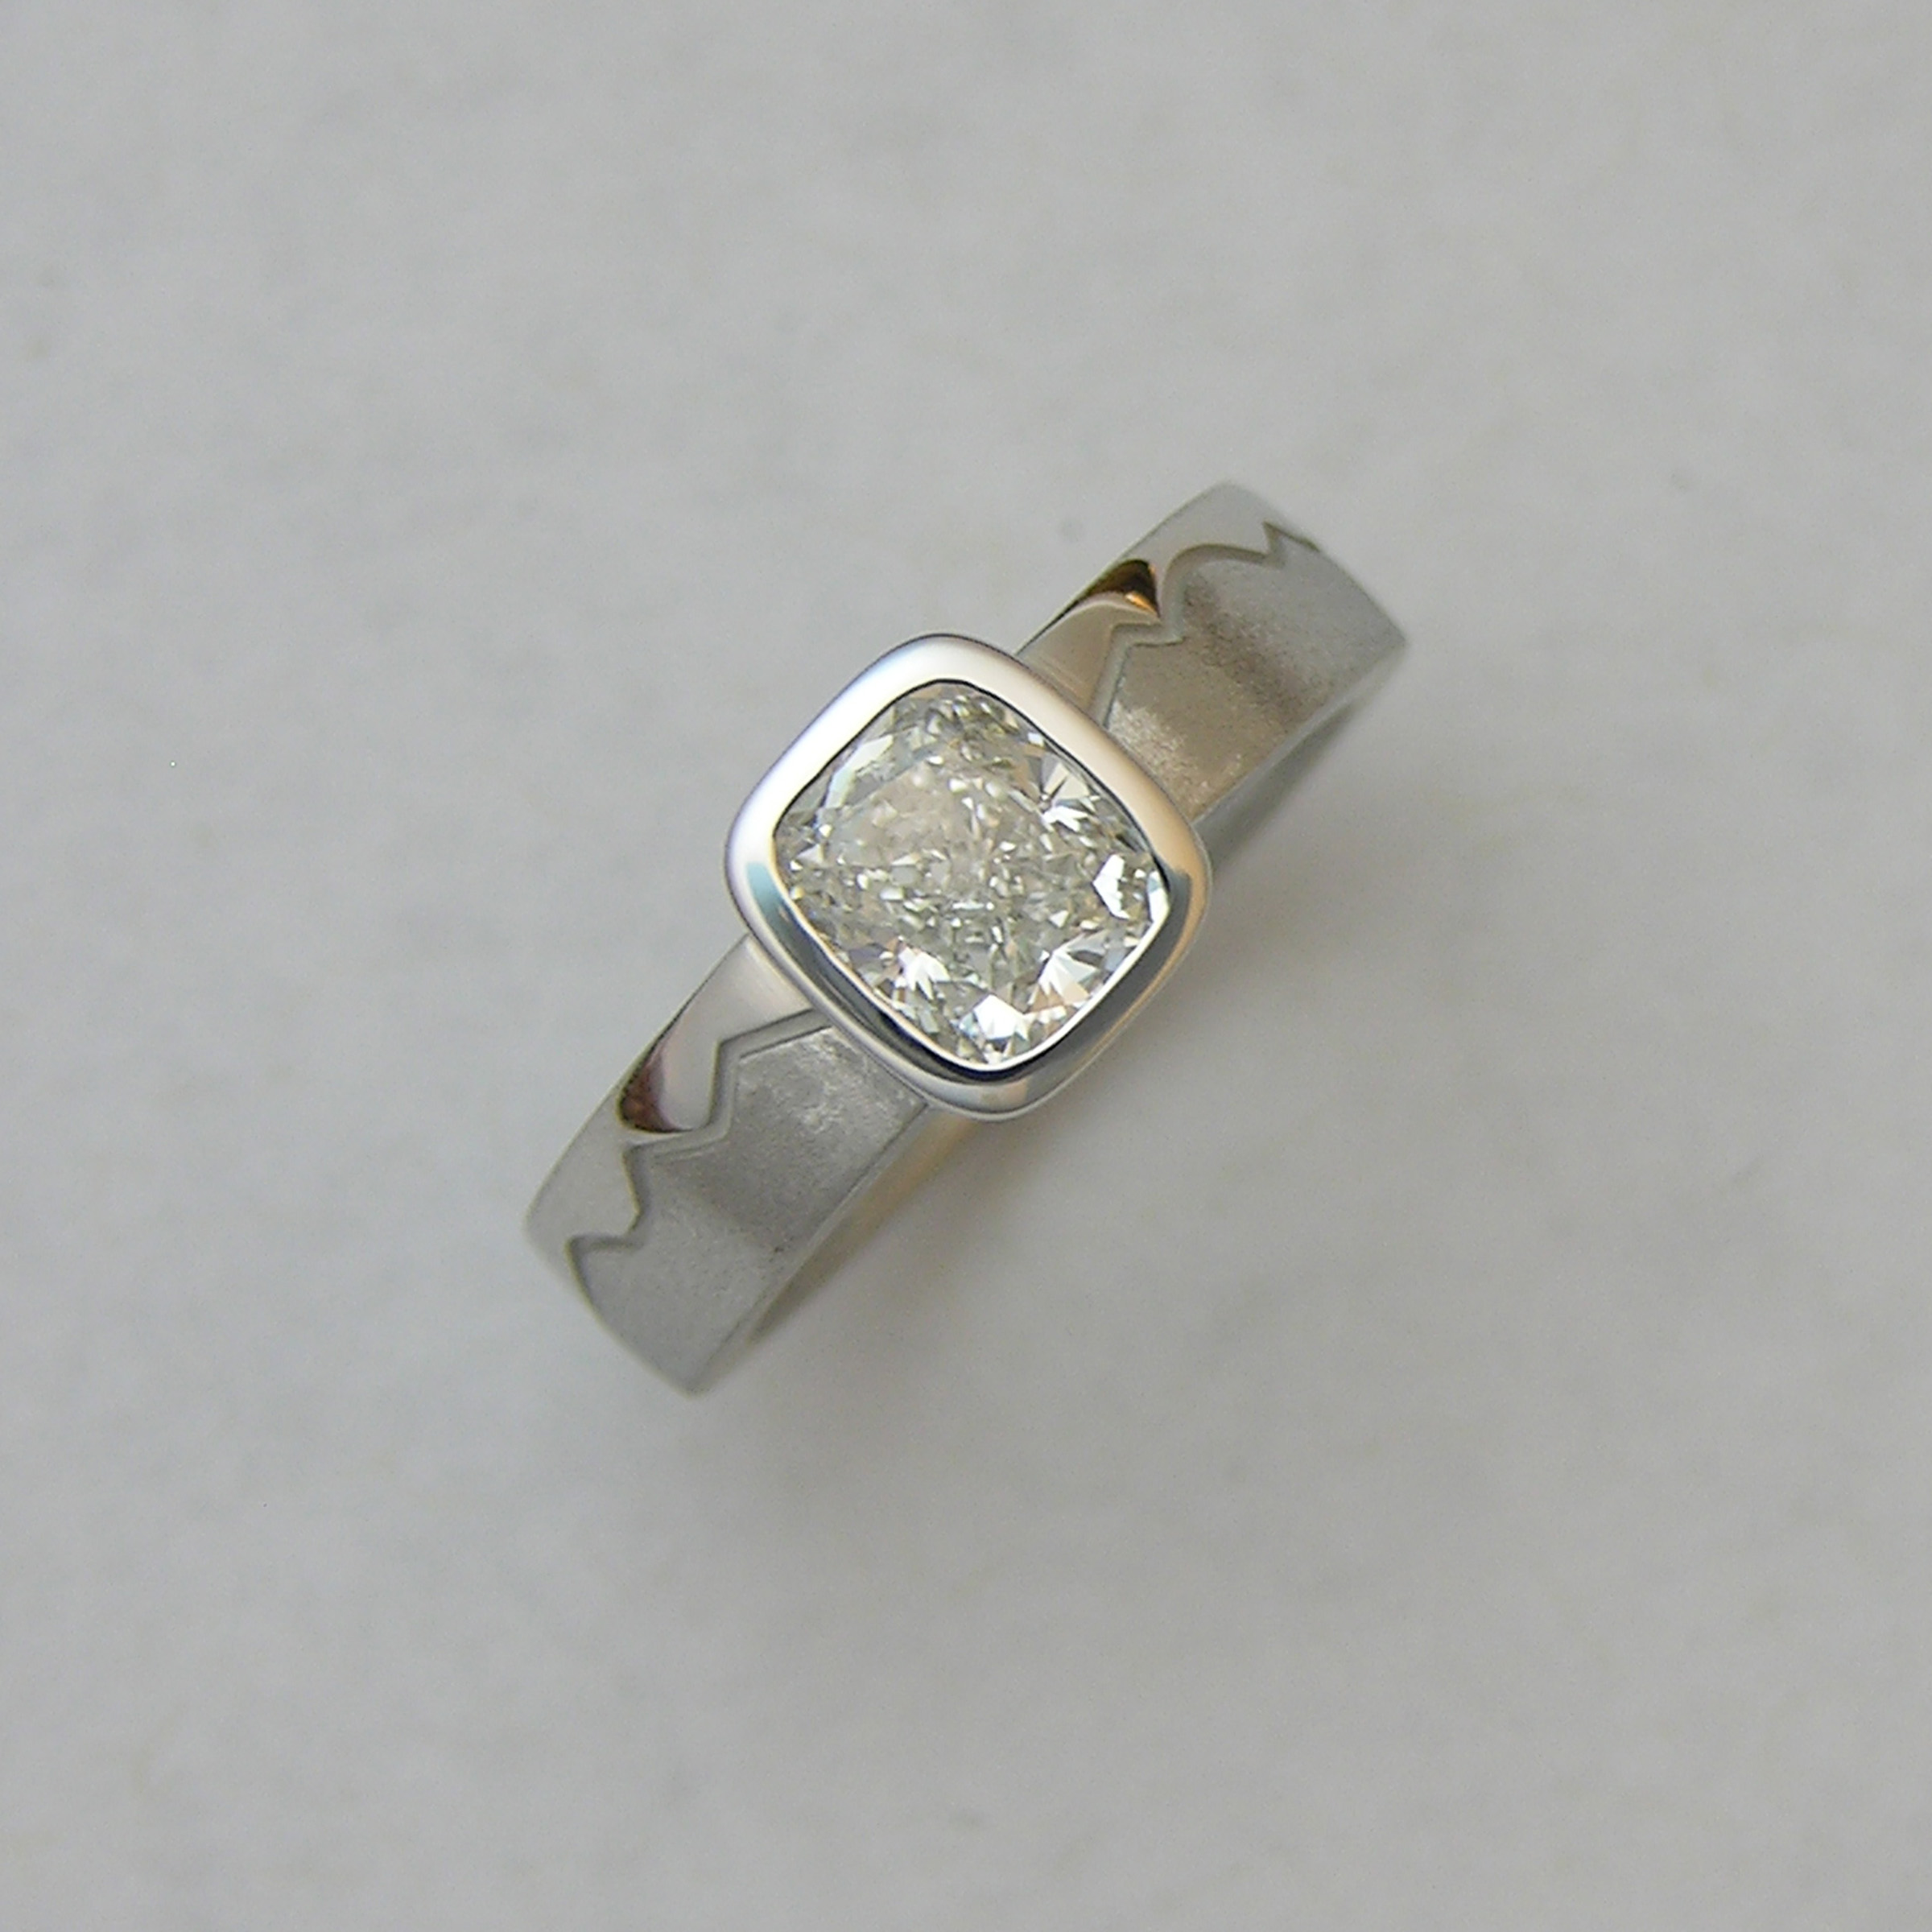 14karat White gold Indian Peaks Skyline Engagement ring with Cushion cut Diamond in full bezel